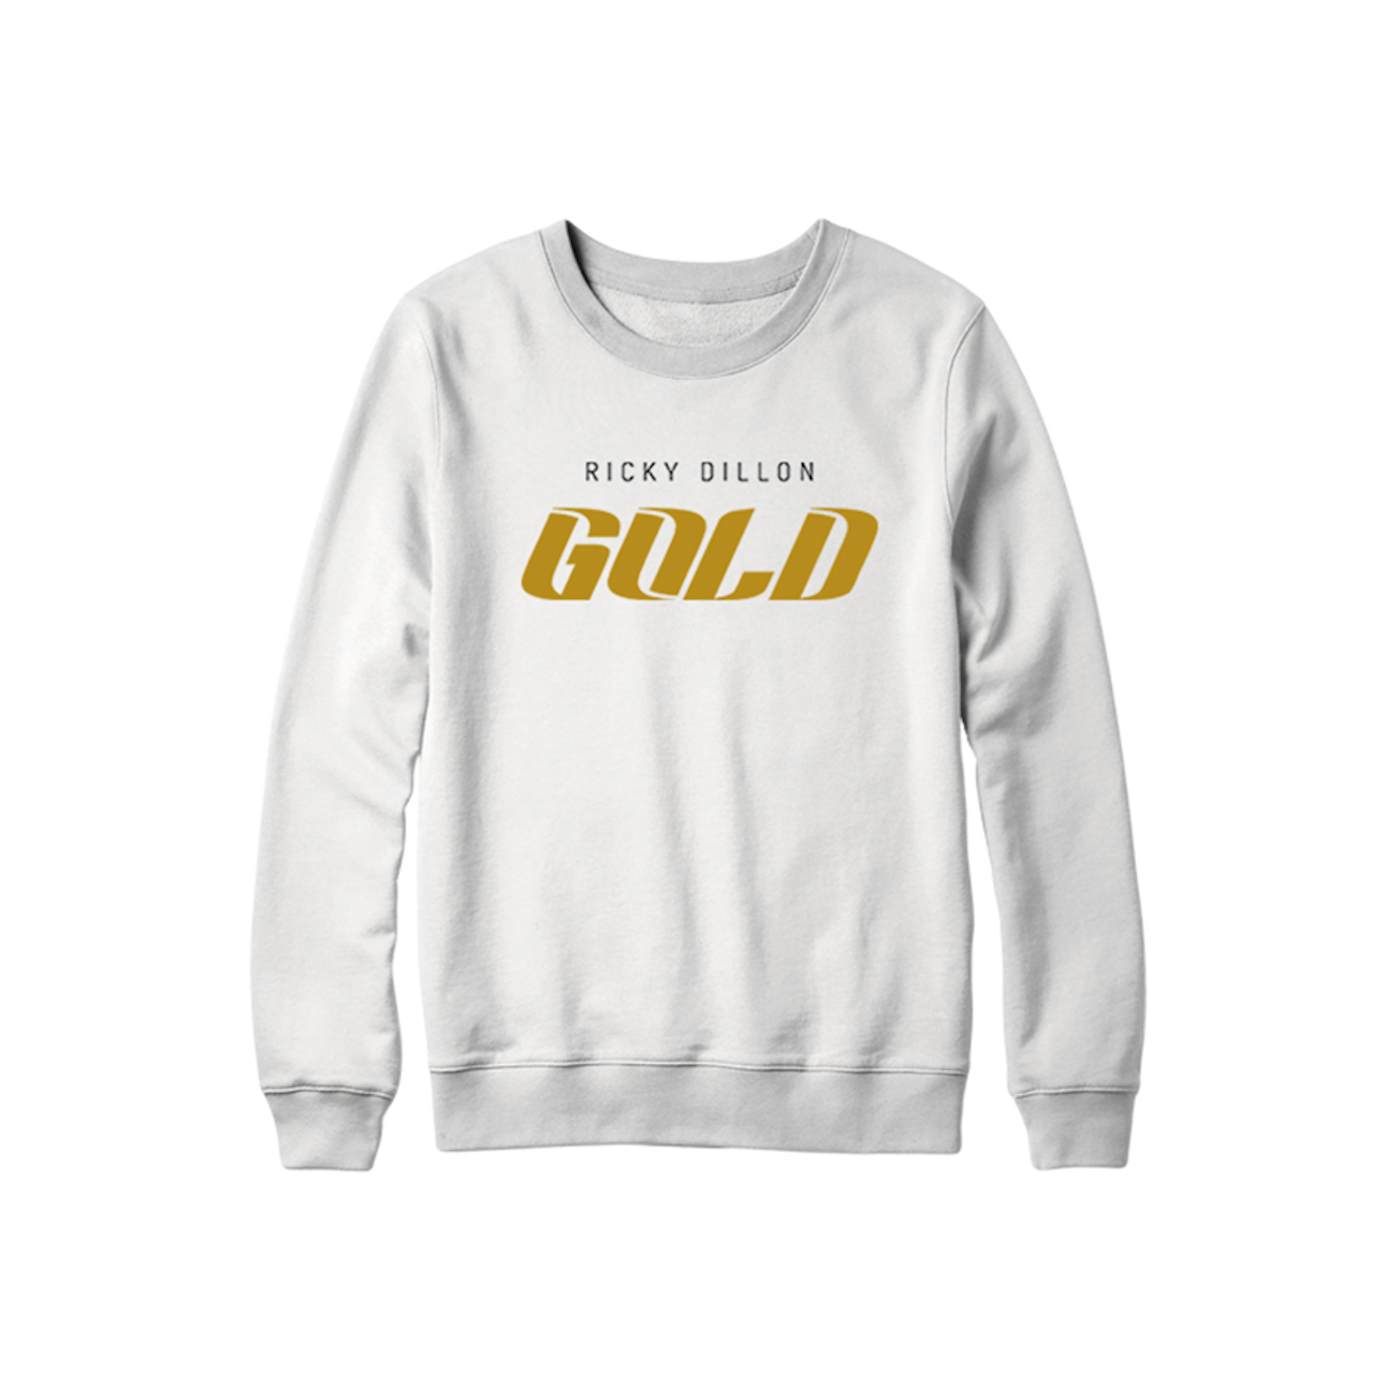 Ricky Dillon GOLD Sweatshirt